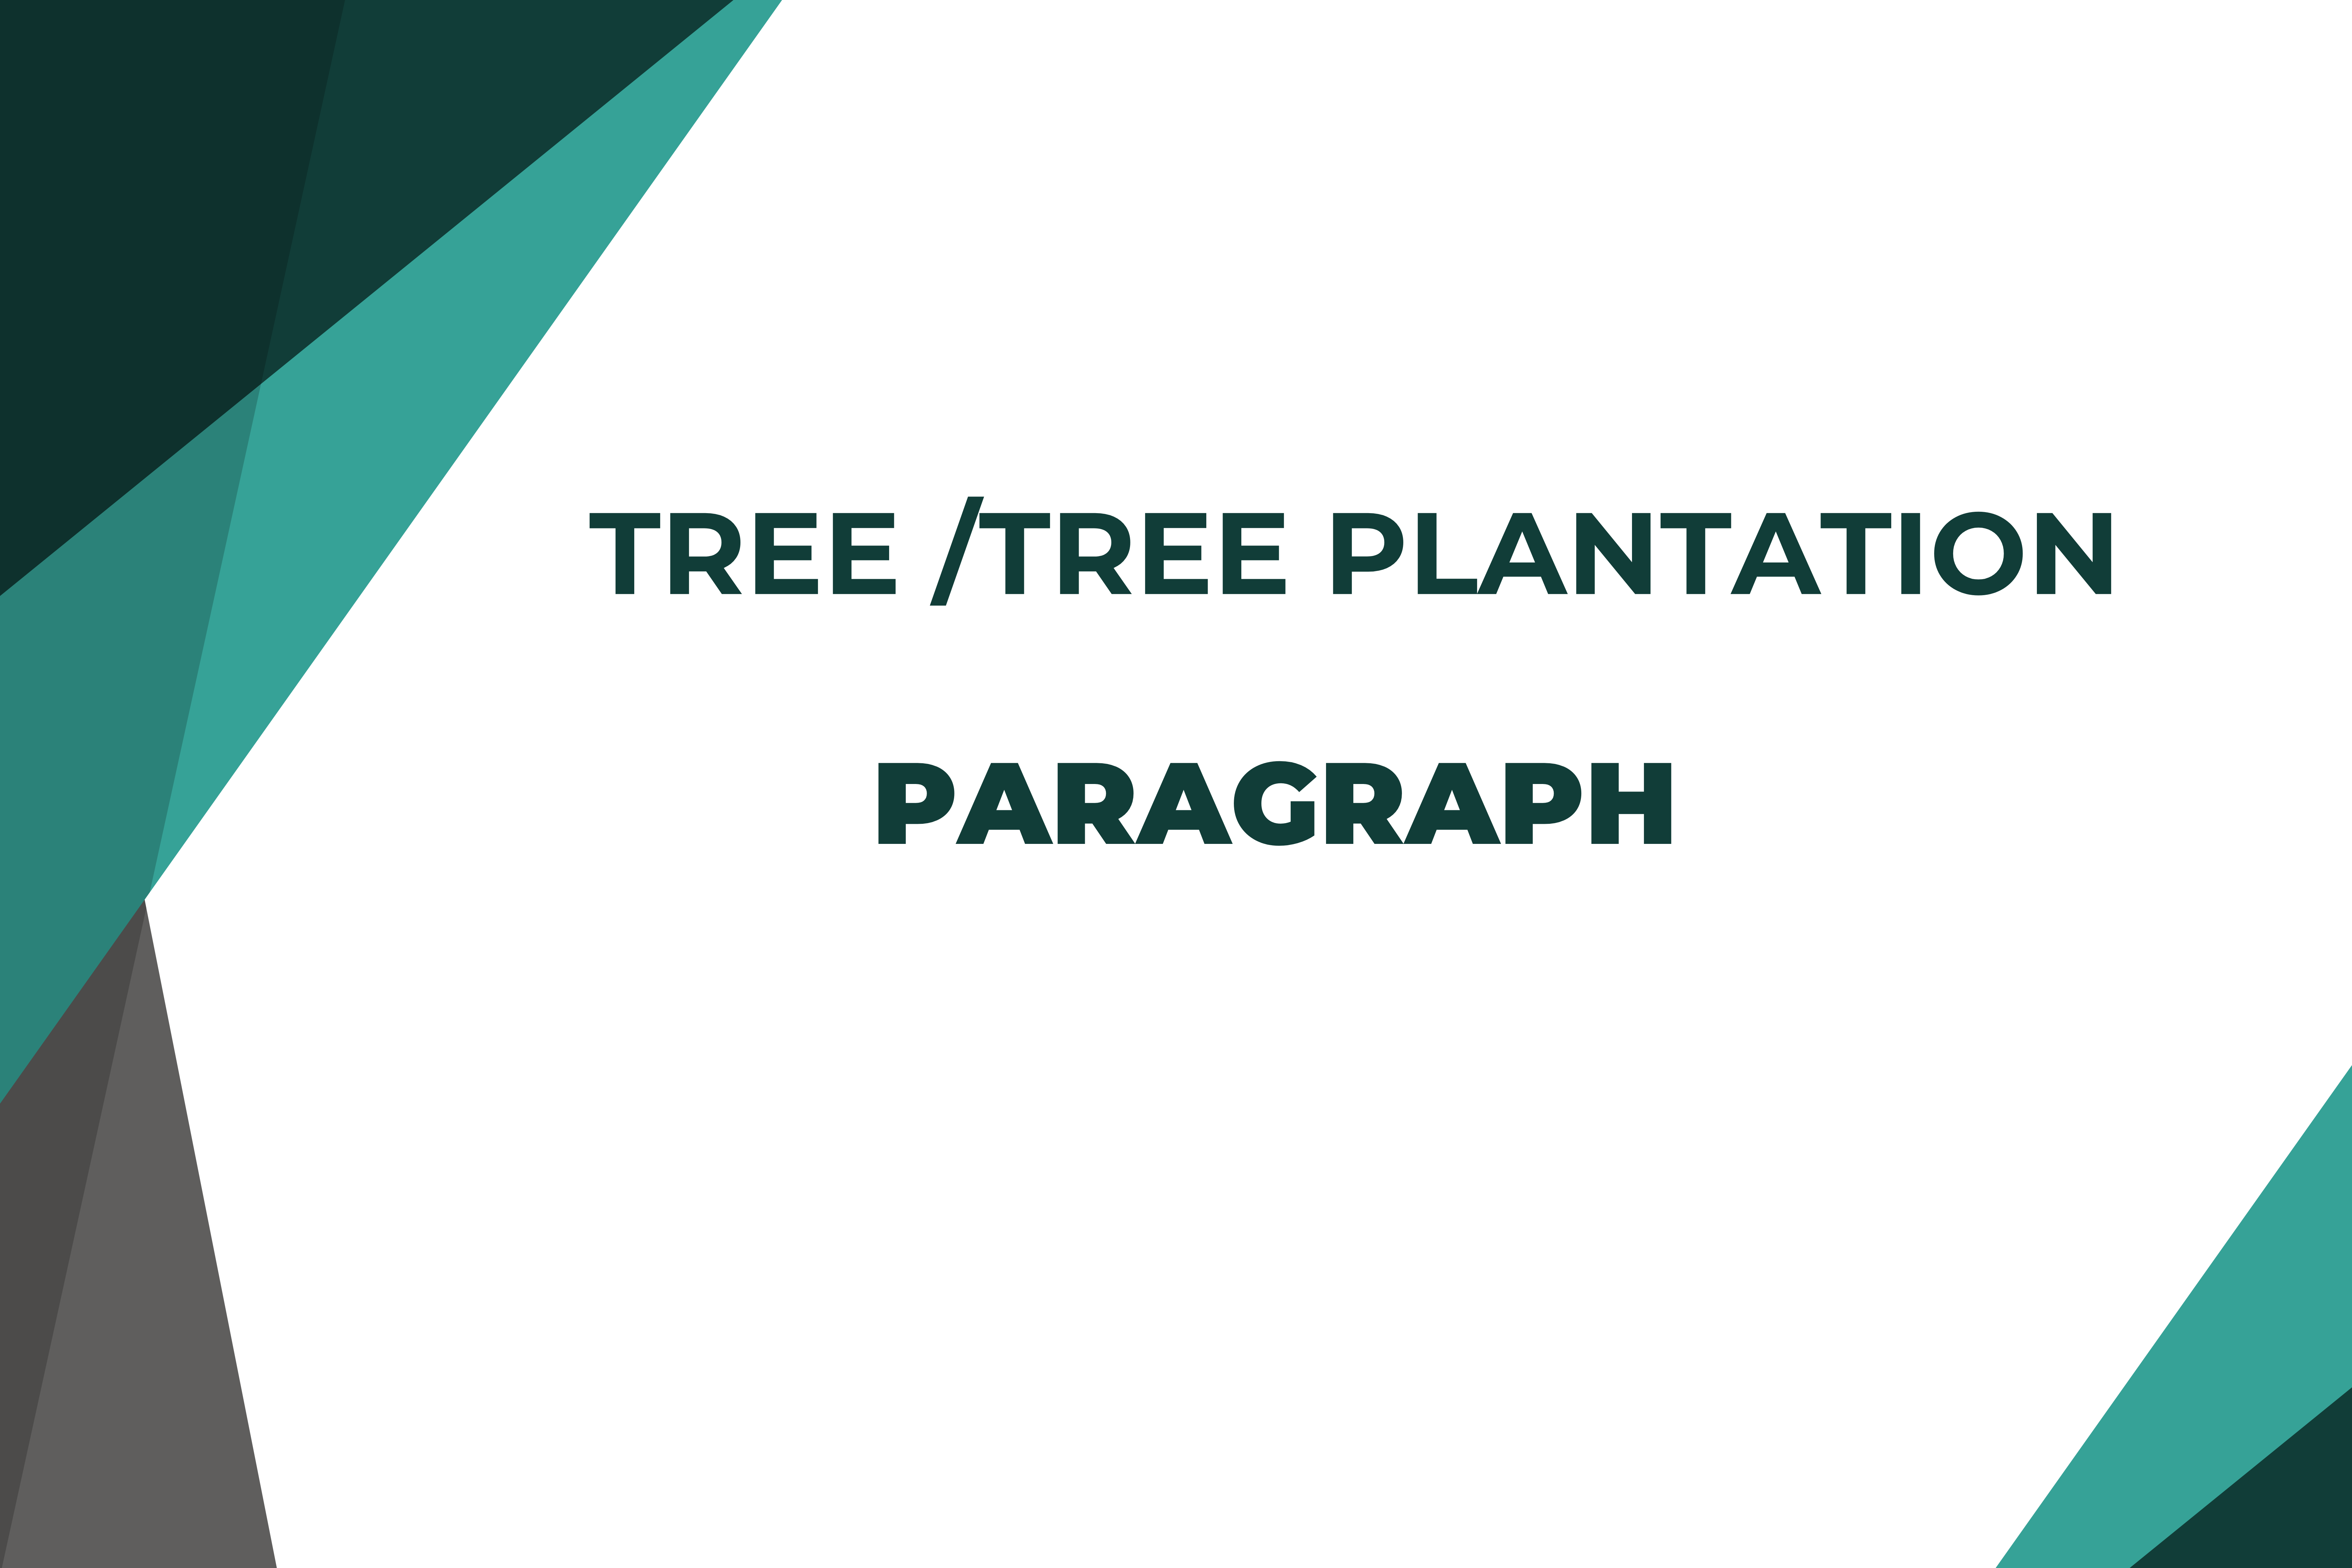 Tree /Tree Plantation paragraph